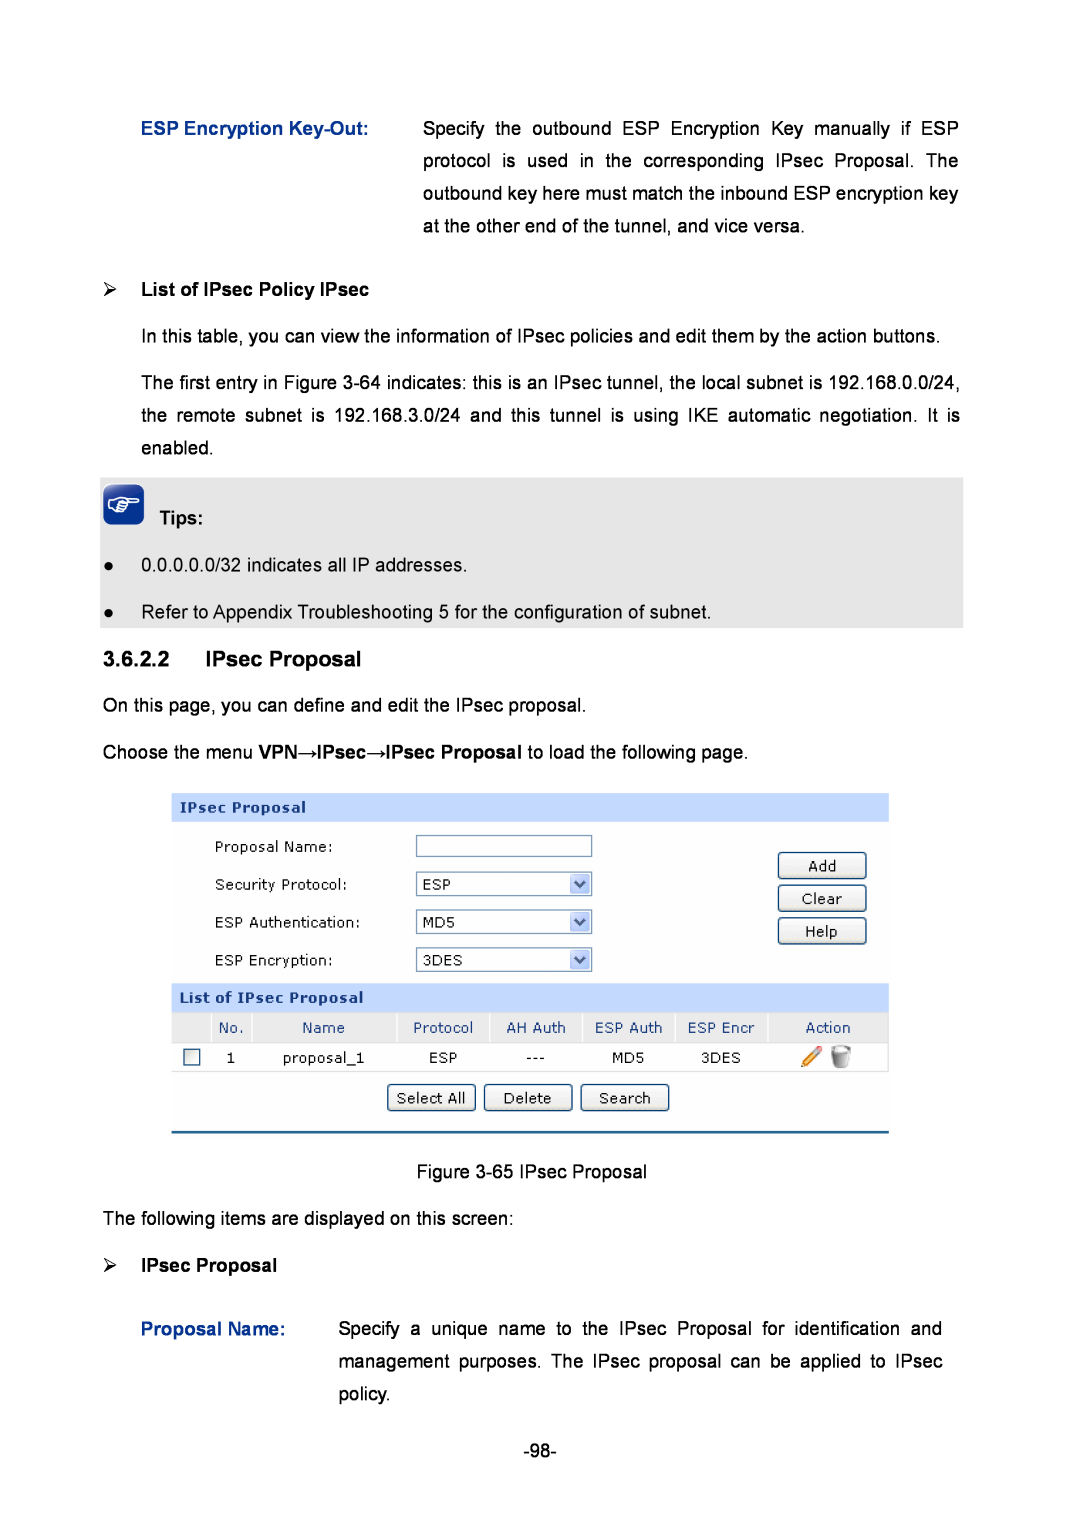 TP-Link TL-ER604W manual  List of IPsec Policy IPsec,  IPsec Proposal, Tips 